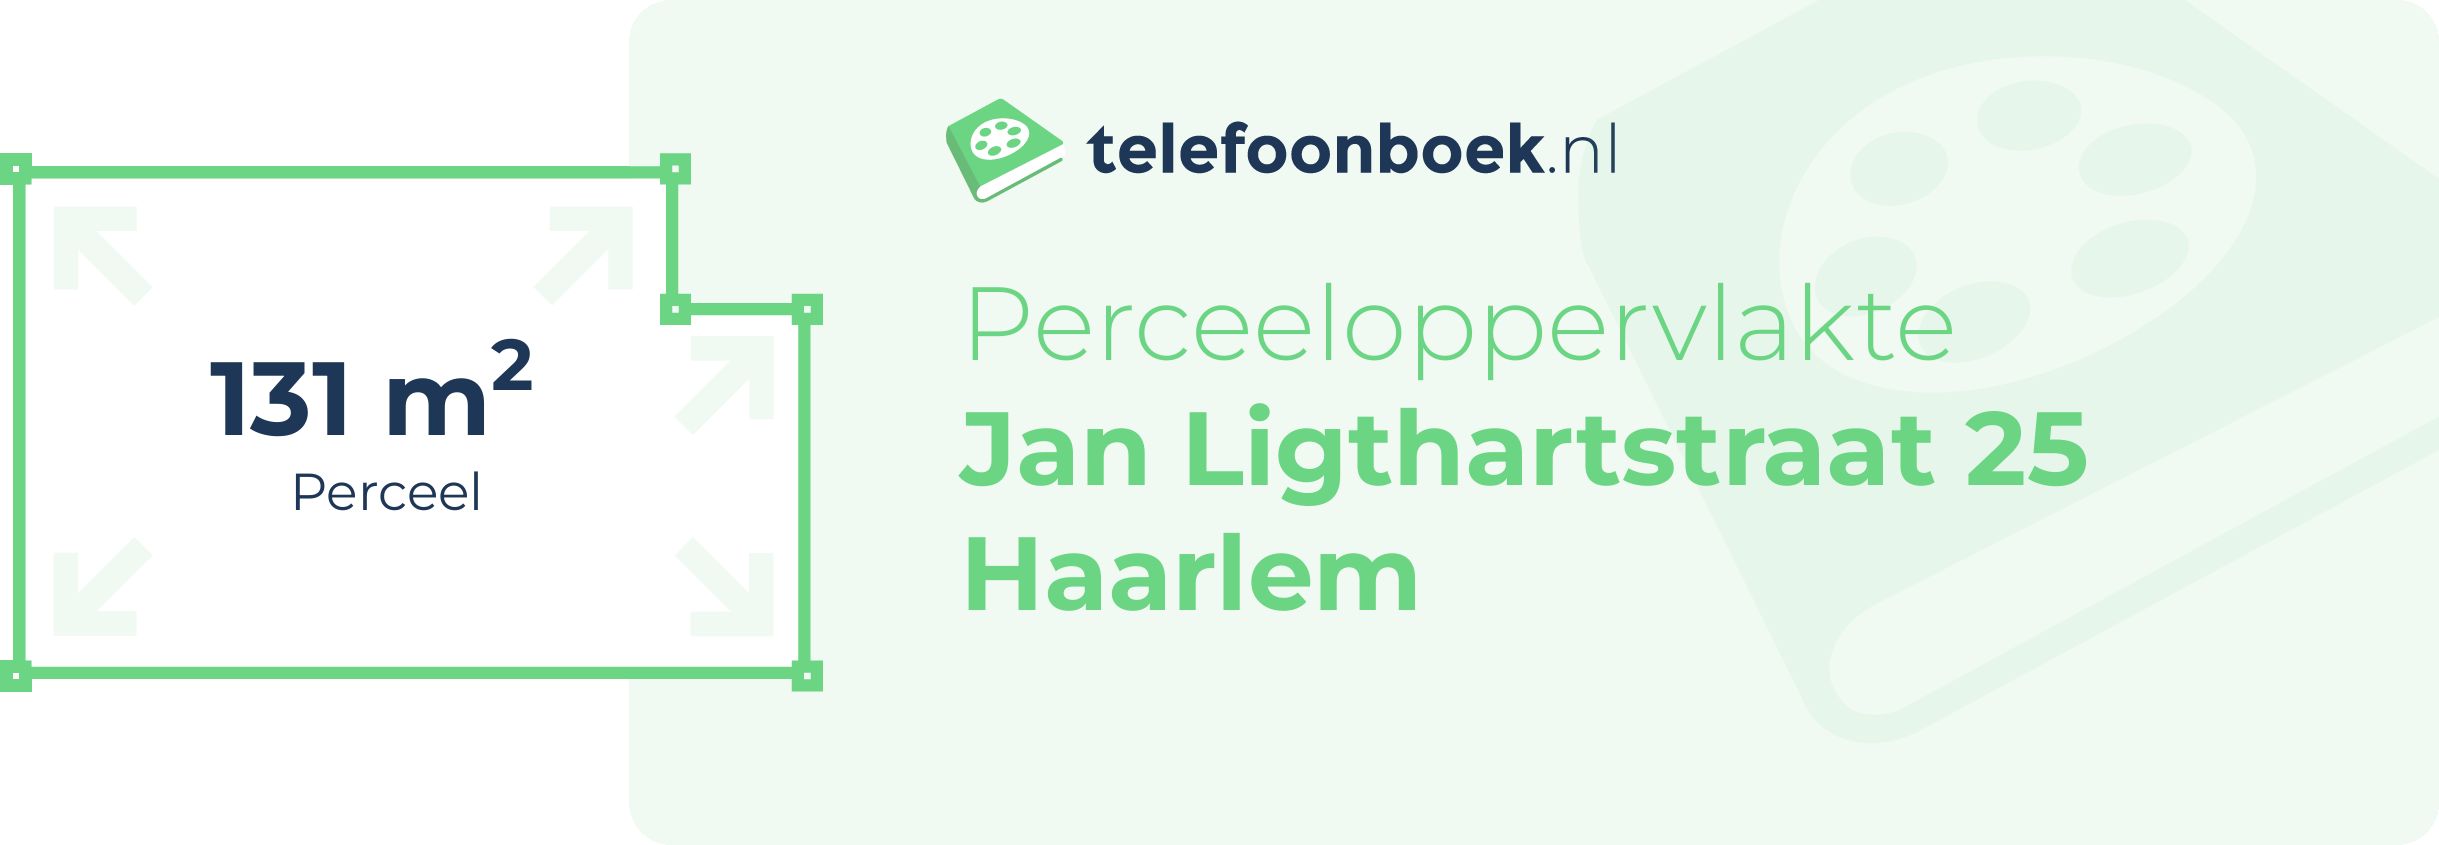 Perceeloppervlakte Jan Ligthartstraat 25 Haarlem